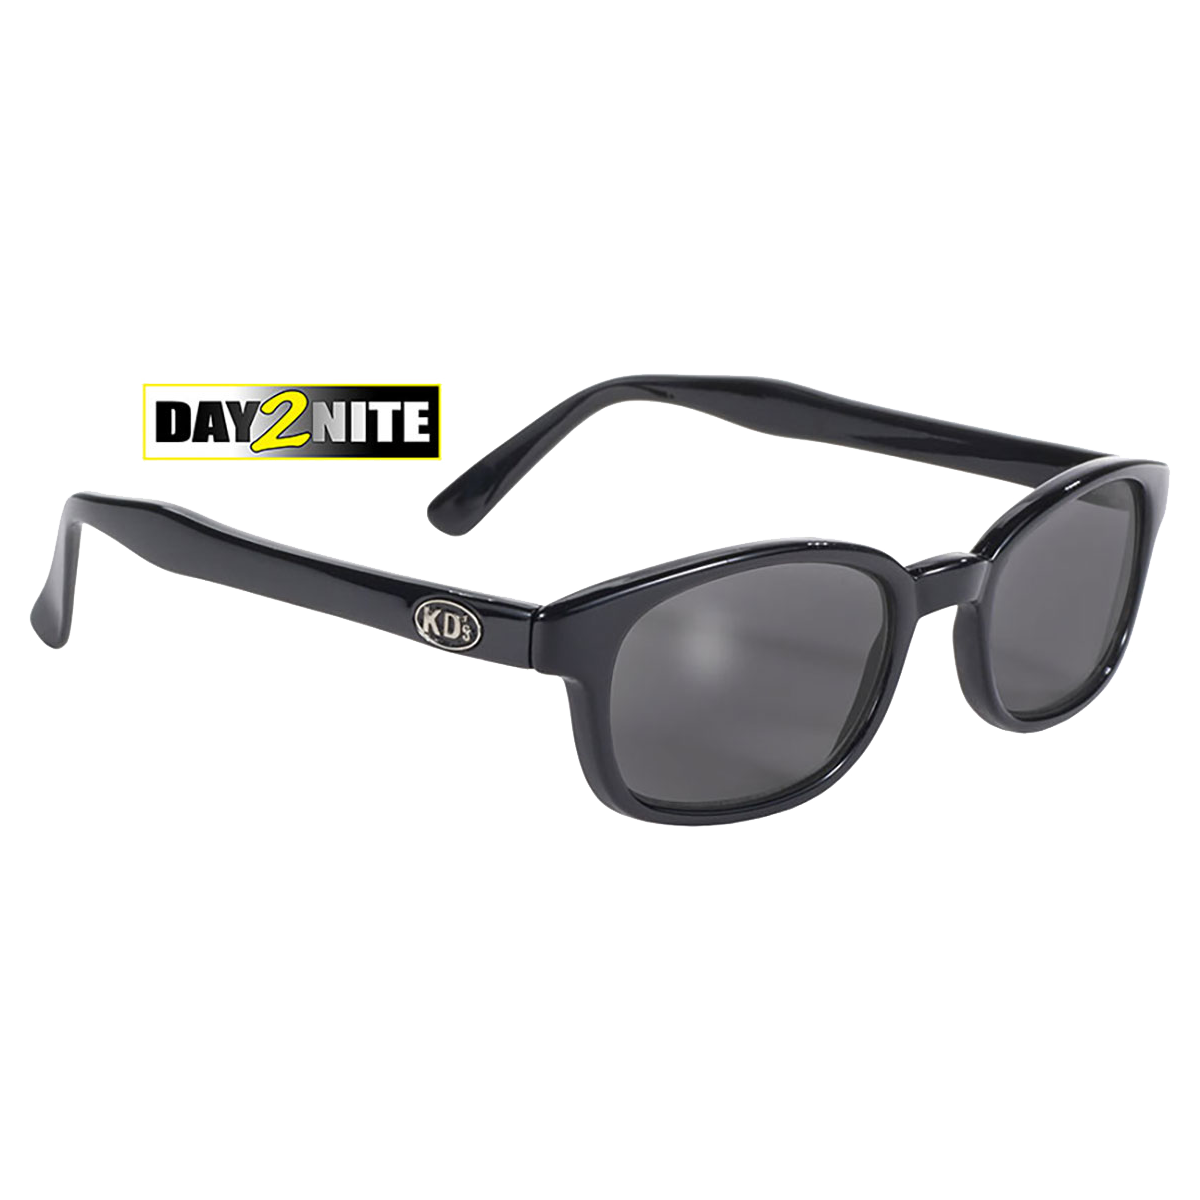 Sunglasses KD's 2011 - photochromic Day2Nite